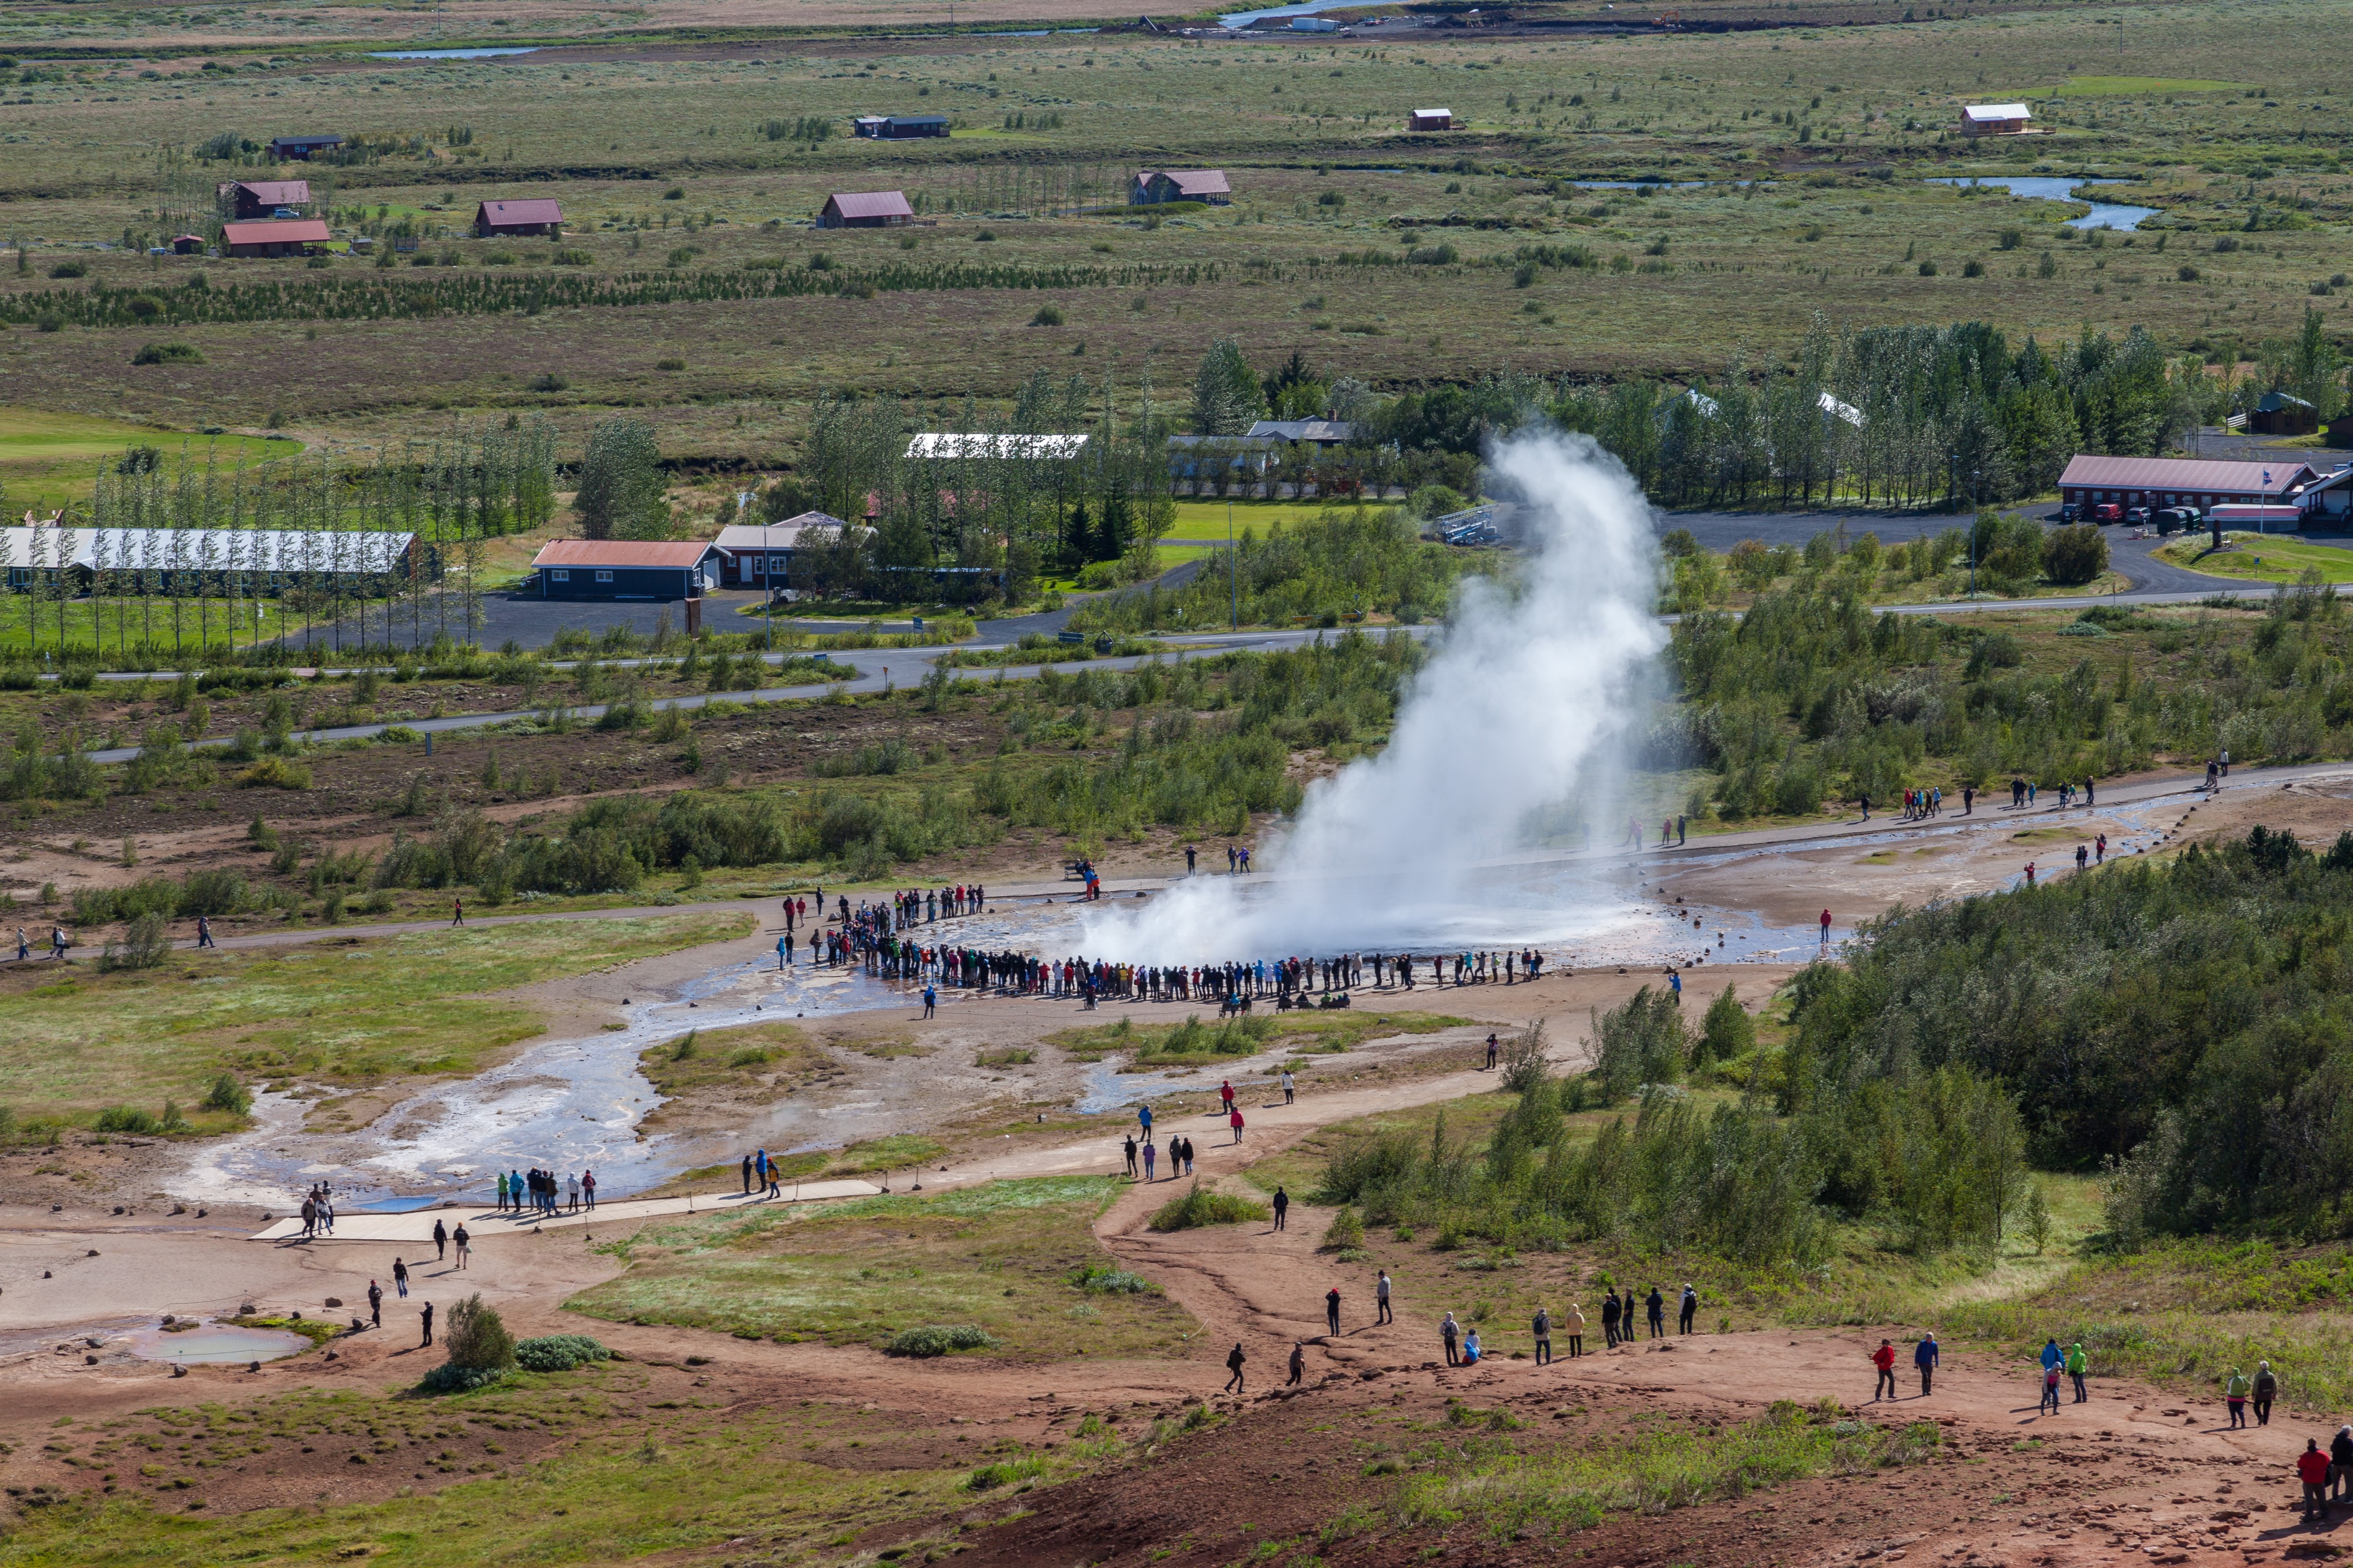 Strokkur, Área geotérmica de Geysir, Suðurland, Islandia, 2014-08-16, DD 098